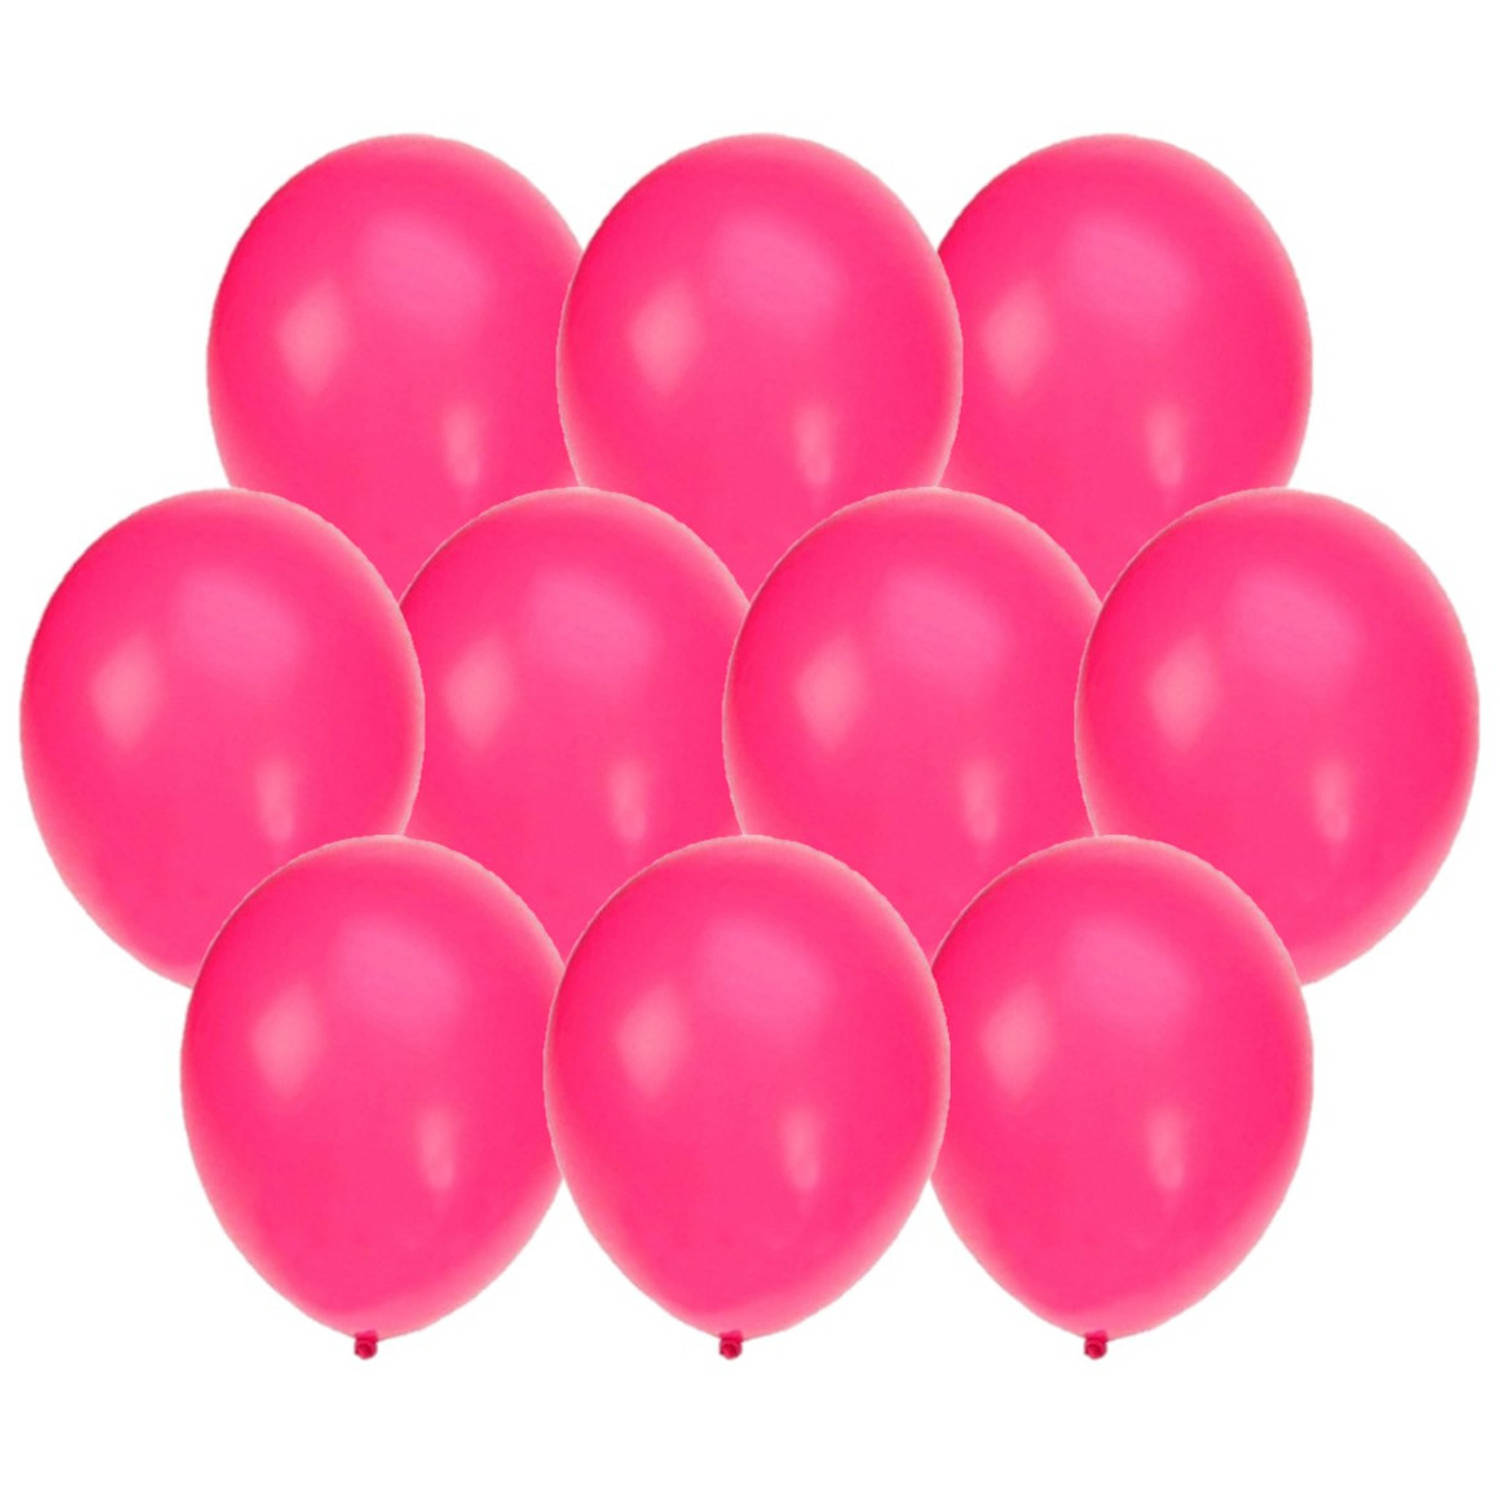 30x stuks Neon roze party ballonnen 27 cm - Ballonnen